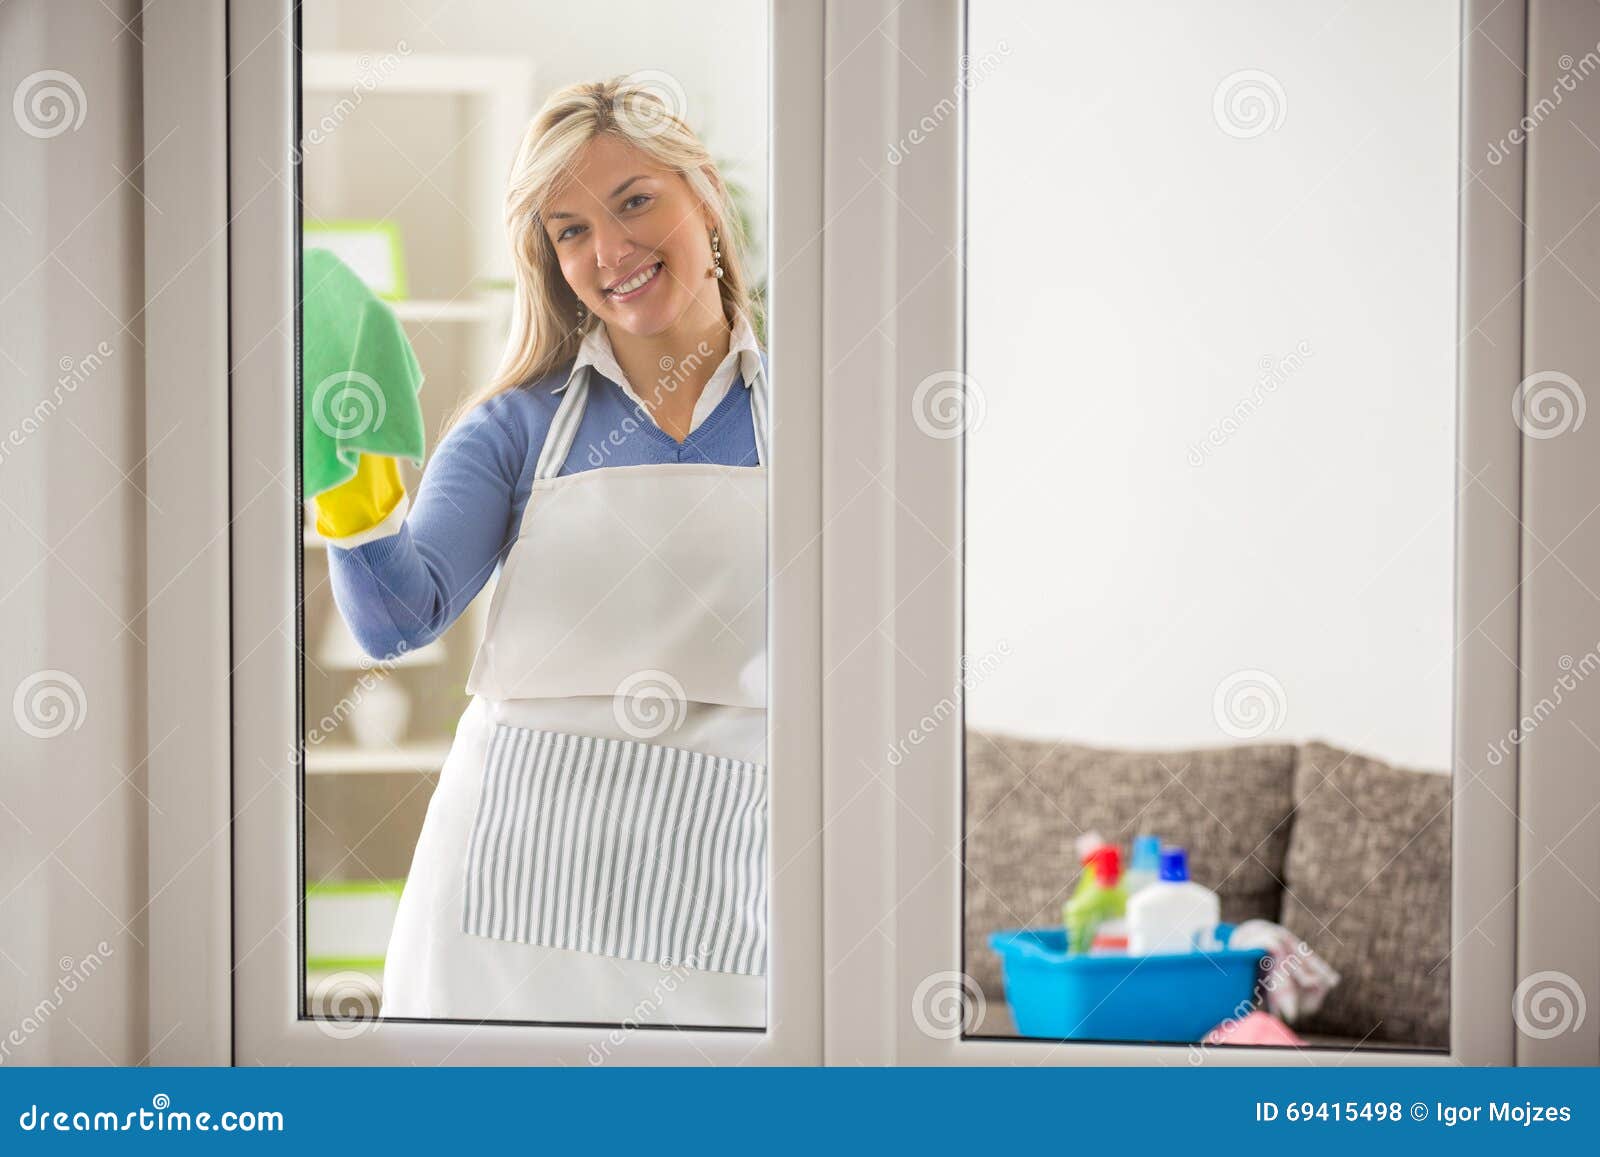 housewife washing windows